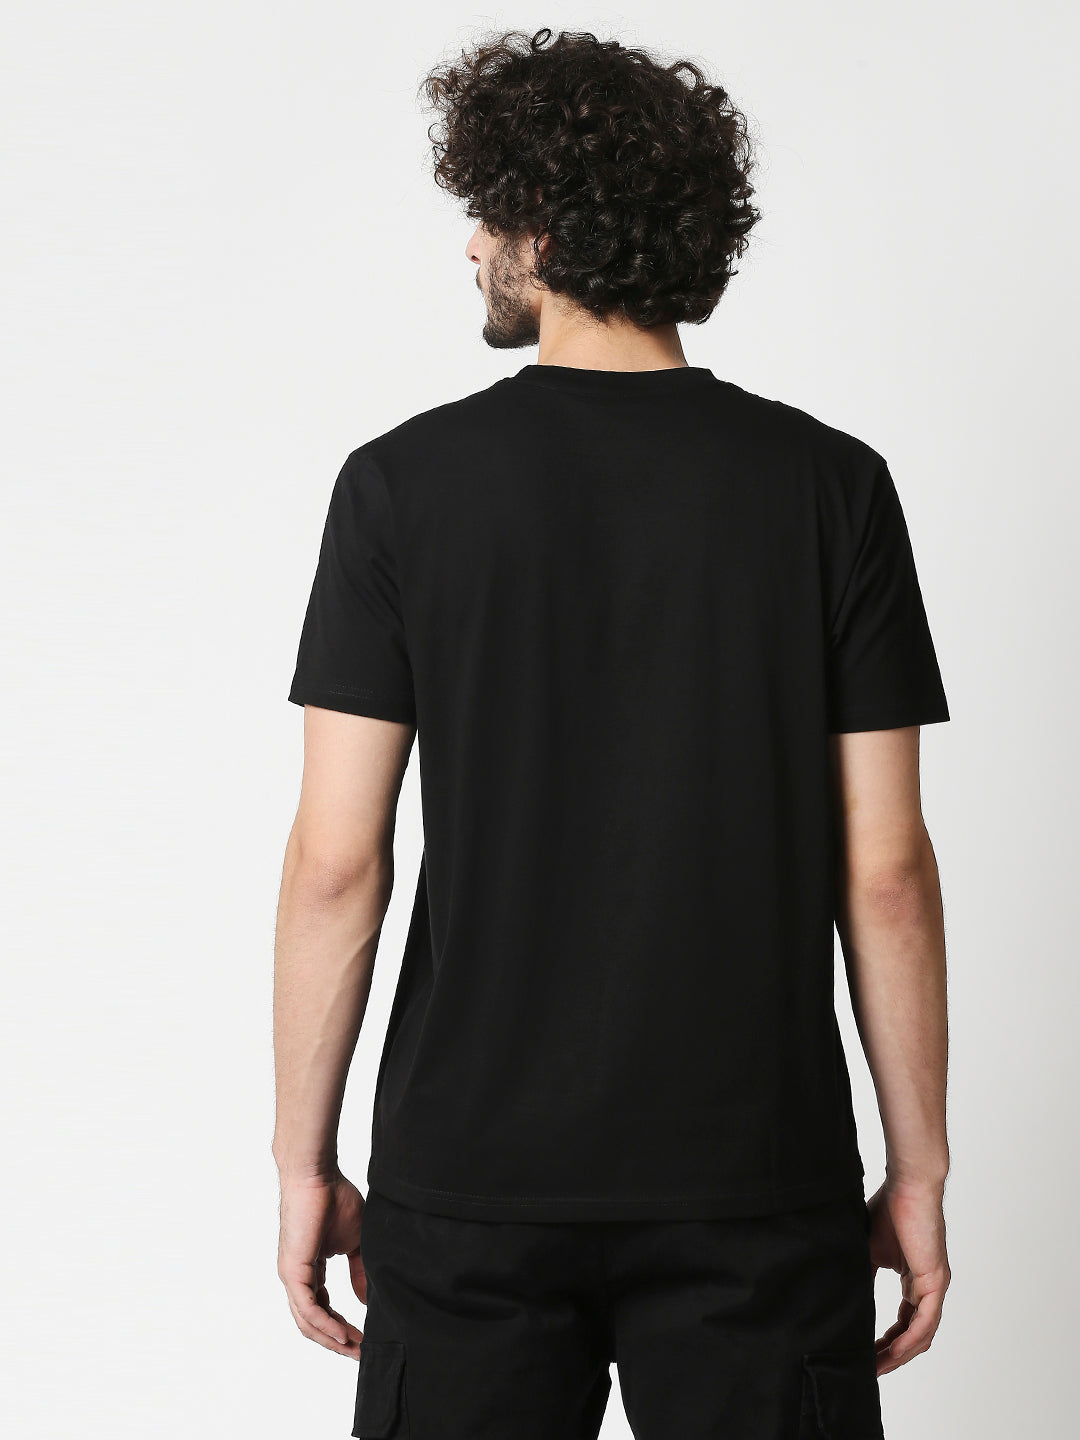 Buy BLAMBLACK Men Round neck T Shirt Black Color Front Printed Half sleeves